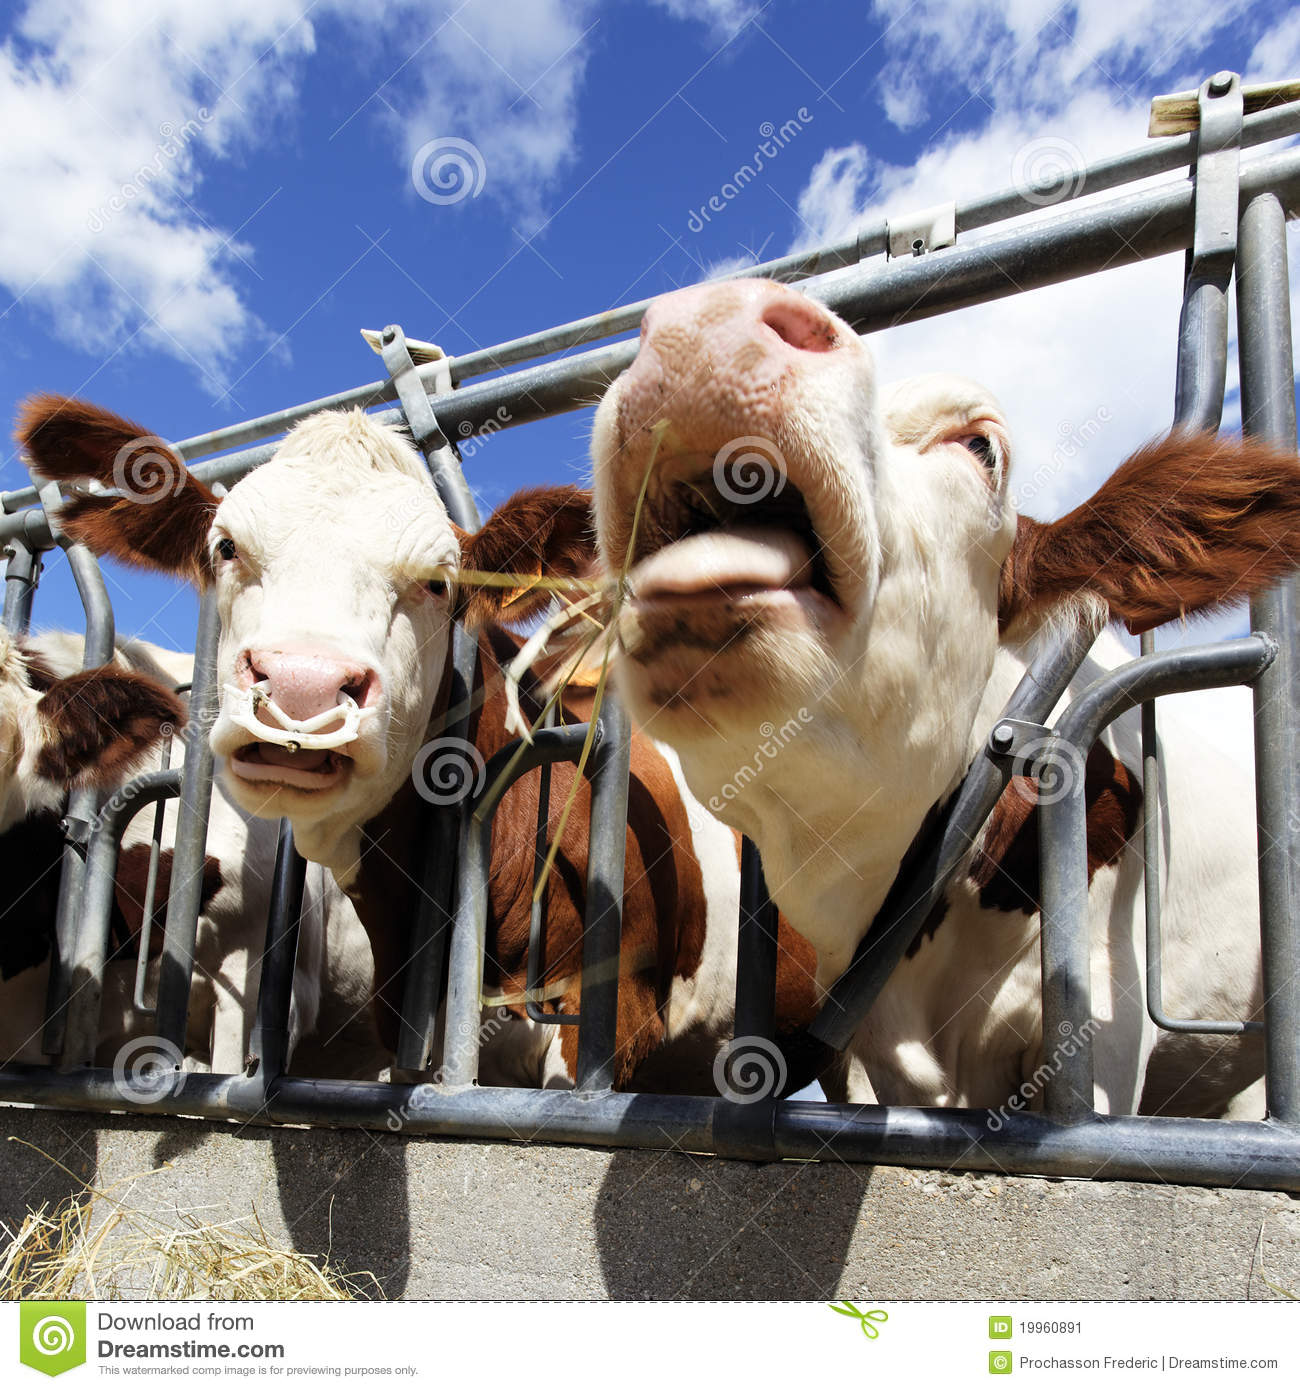 Crazy Cow Stock Image   Image  19960891